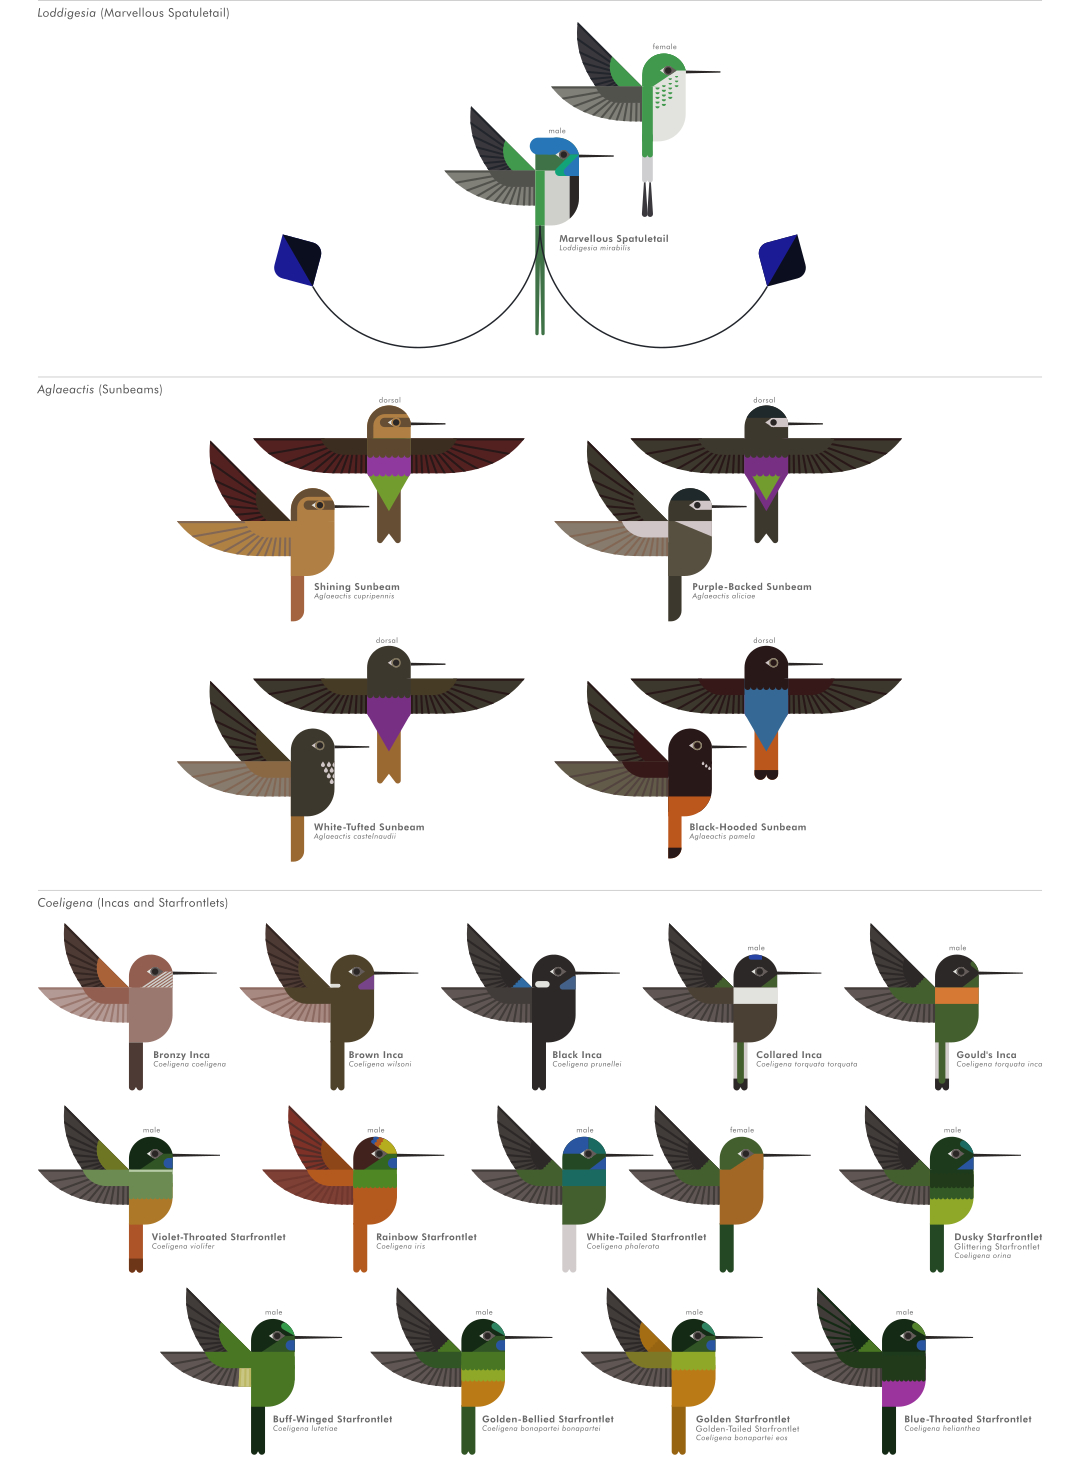 scott partridge - ave - avian vector encyclopedia - hummingbirds Trochilidae - vector bird art